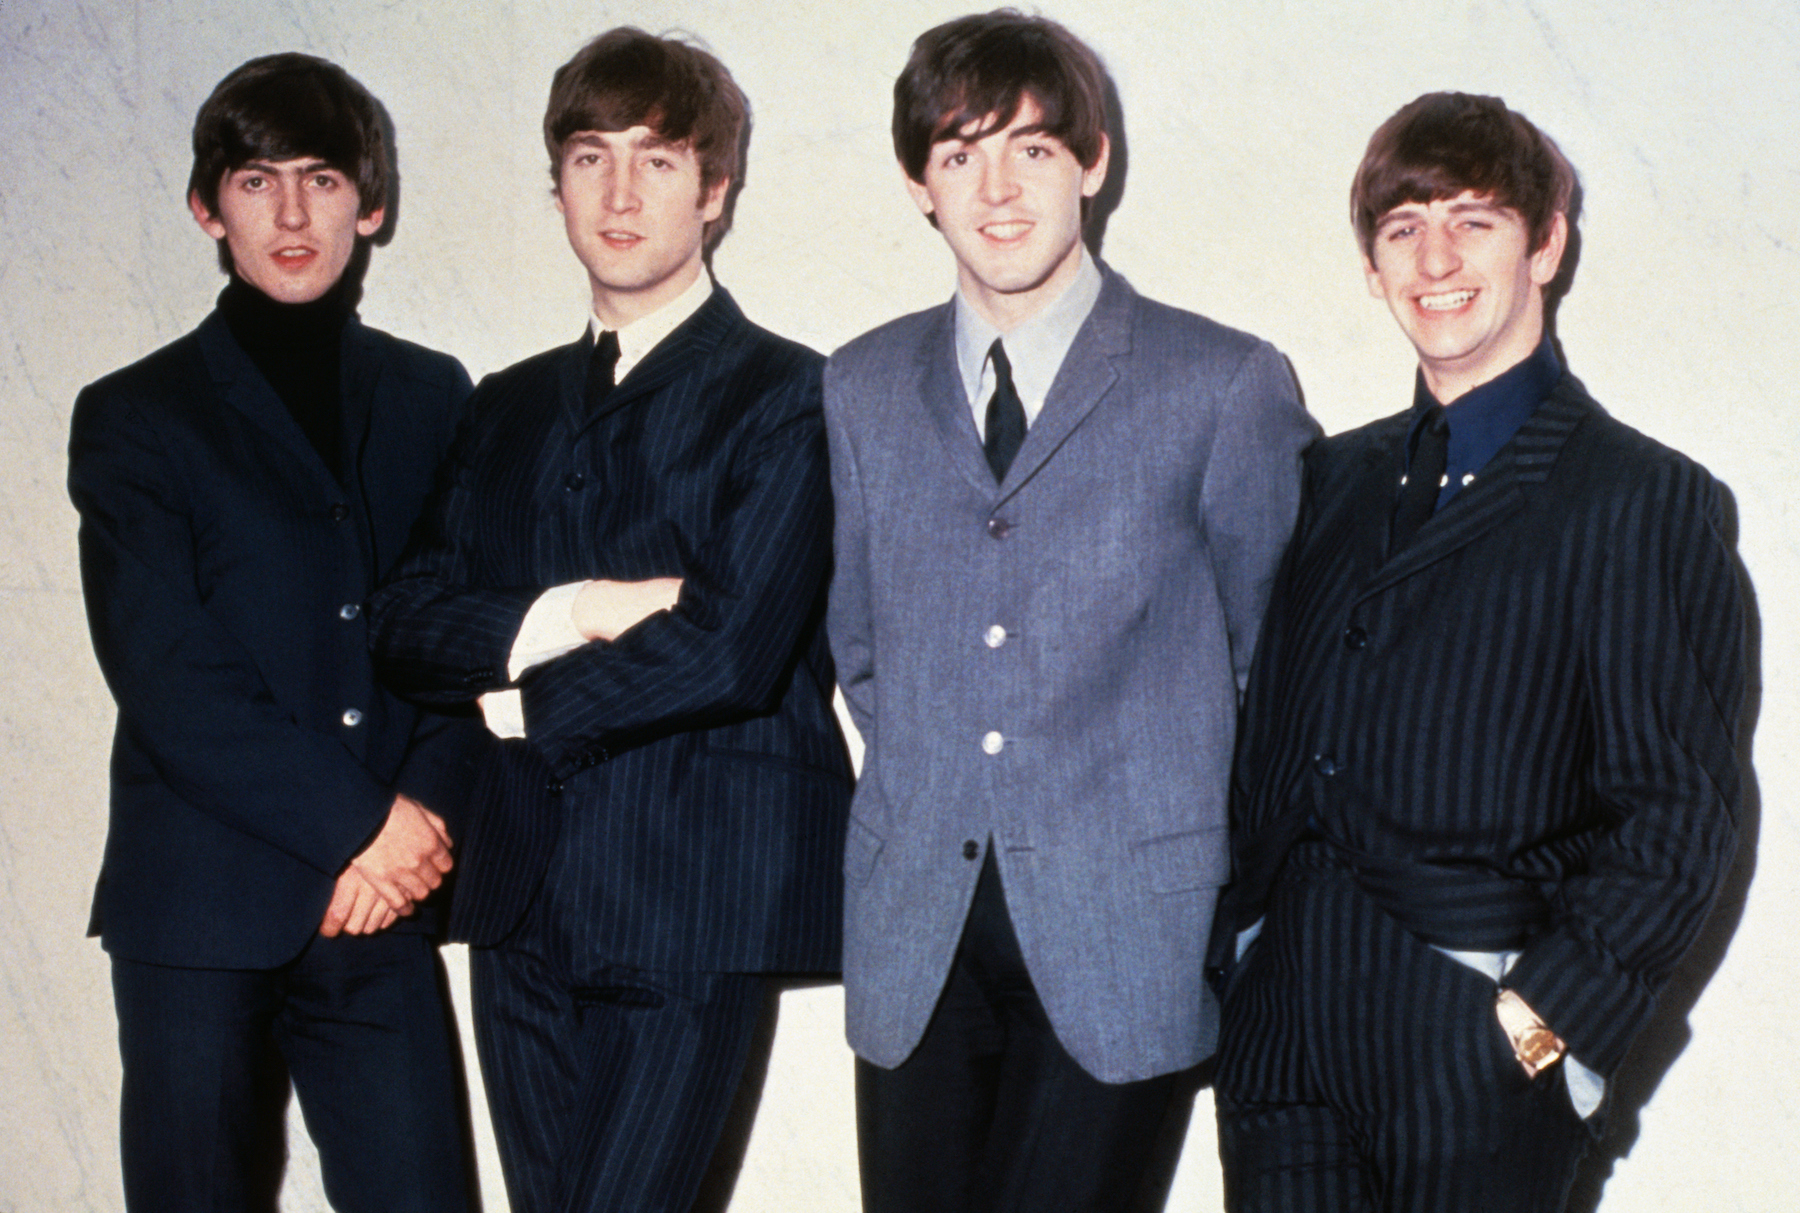 The Beatles Describe the Origin of Their 'Mop Top' Hairstyle